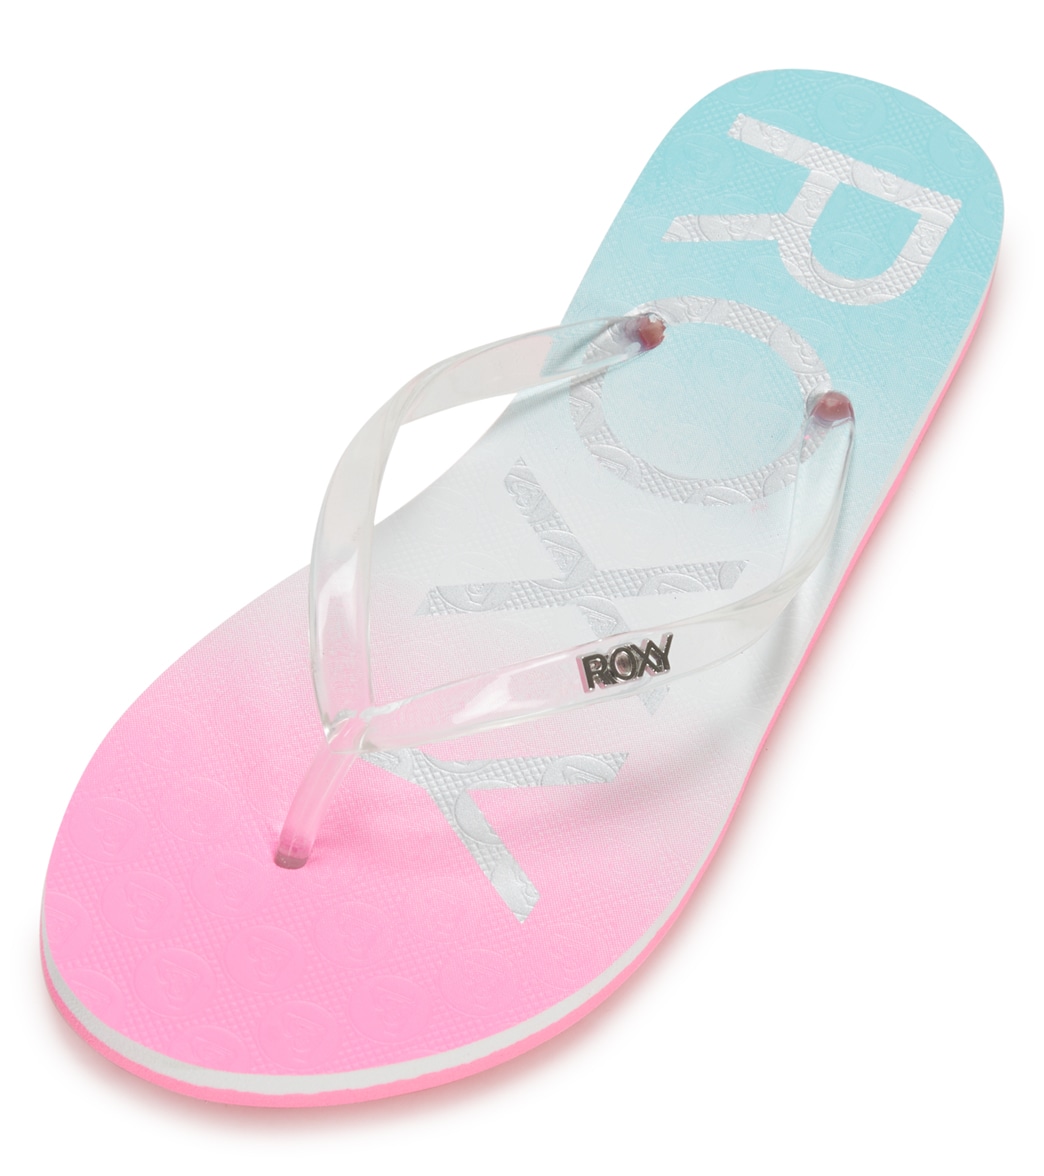 Roxy Women's Viva Jelly Flip Flop - White/Crazy Pink/Turquoise 10 - Swimoutlet.com